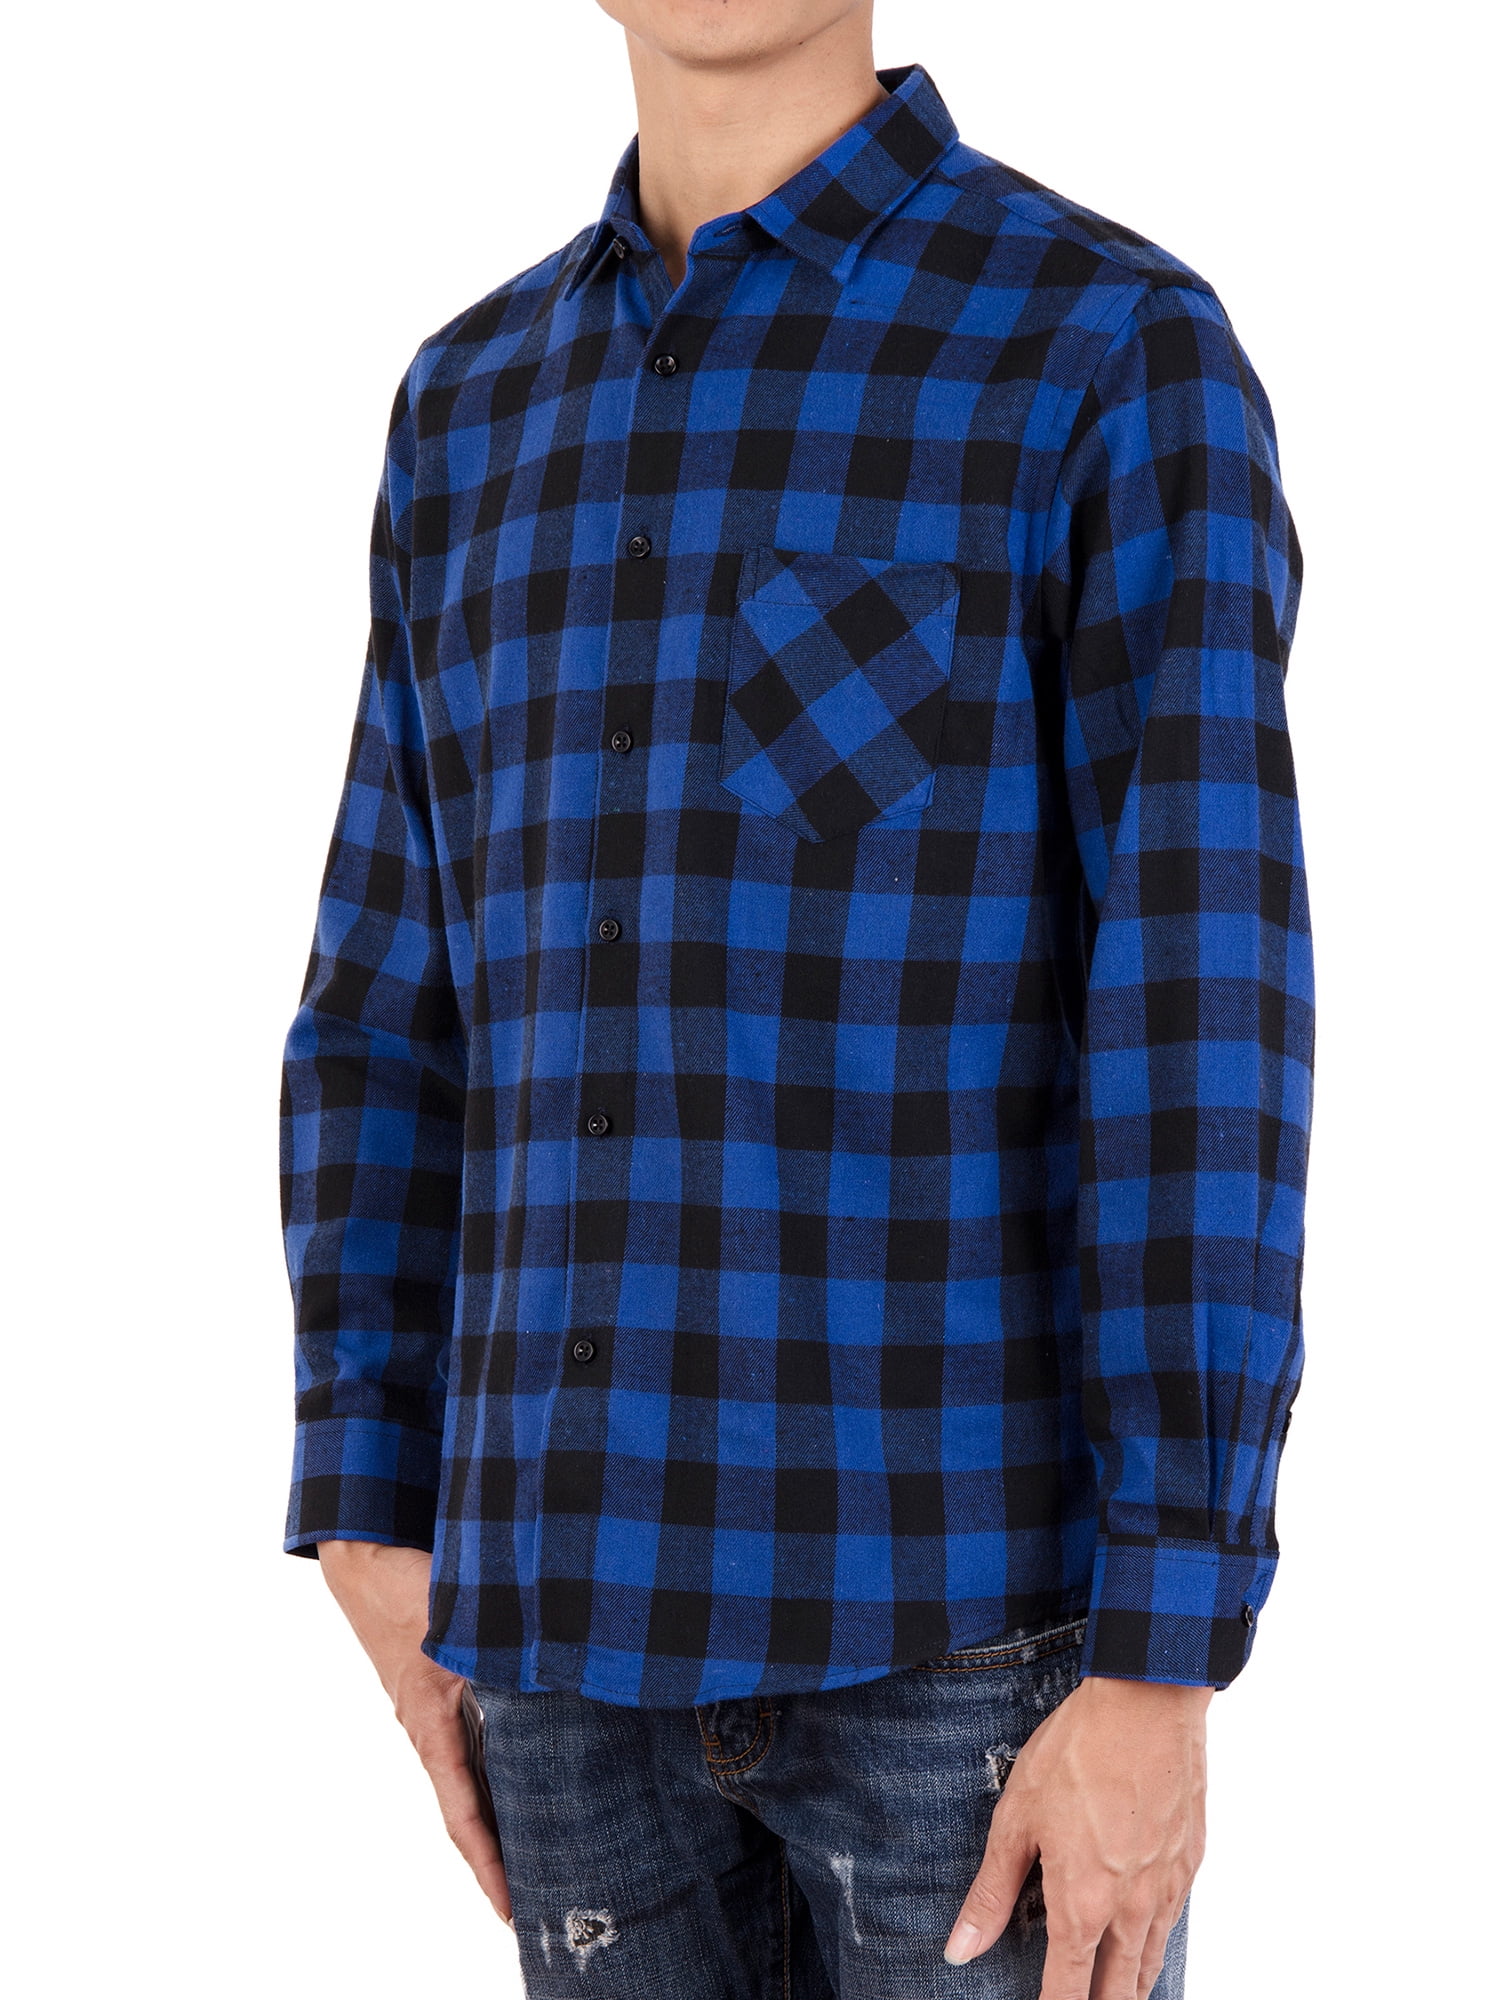 ARTFFEL Mens Button Up Casual Long Sleeve Plaid Print Dress Flannel Checkered Shirt 